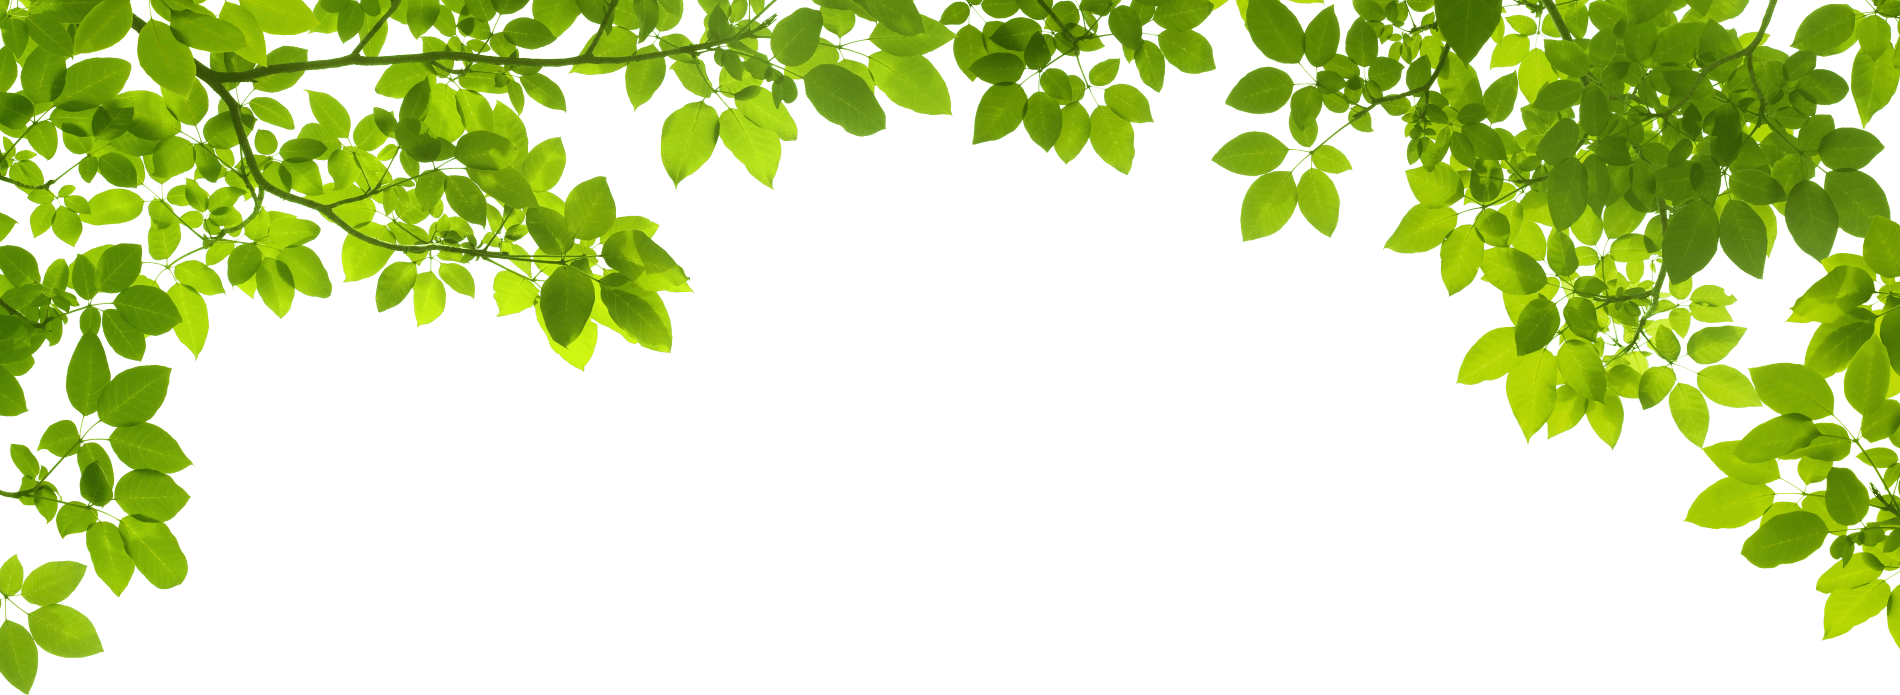 Download Green Leaf Border Png PNG Image with No Background 